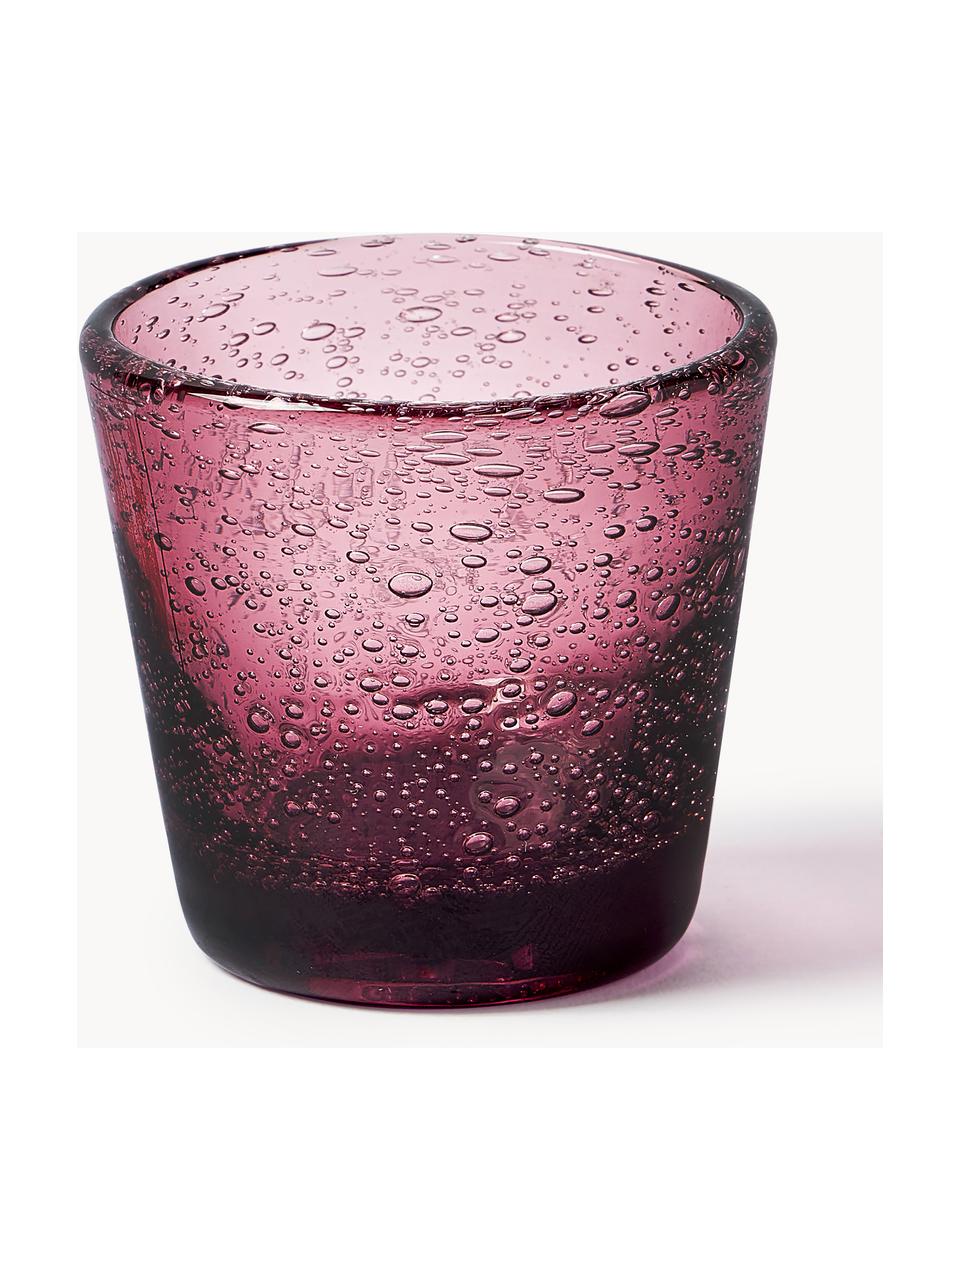 Set di 6 bicchierini con bolle d'aria decorative Cancun, Vetro, Tonalità viola, Ø 6 x Alt. 6 cm, 70 ml